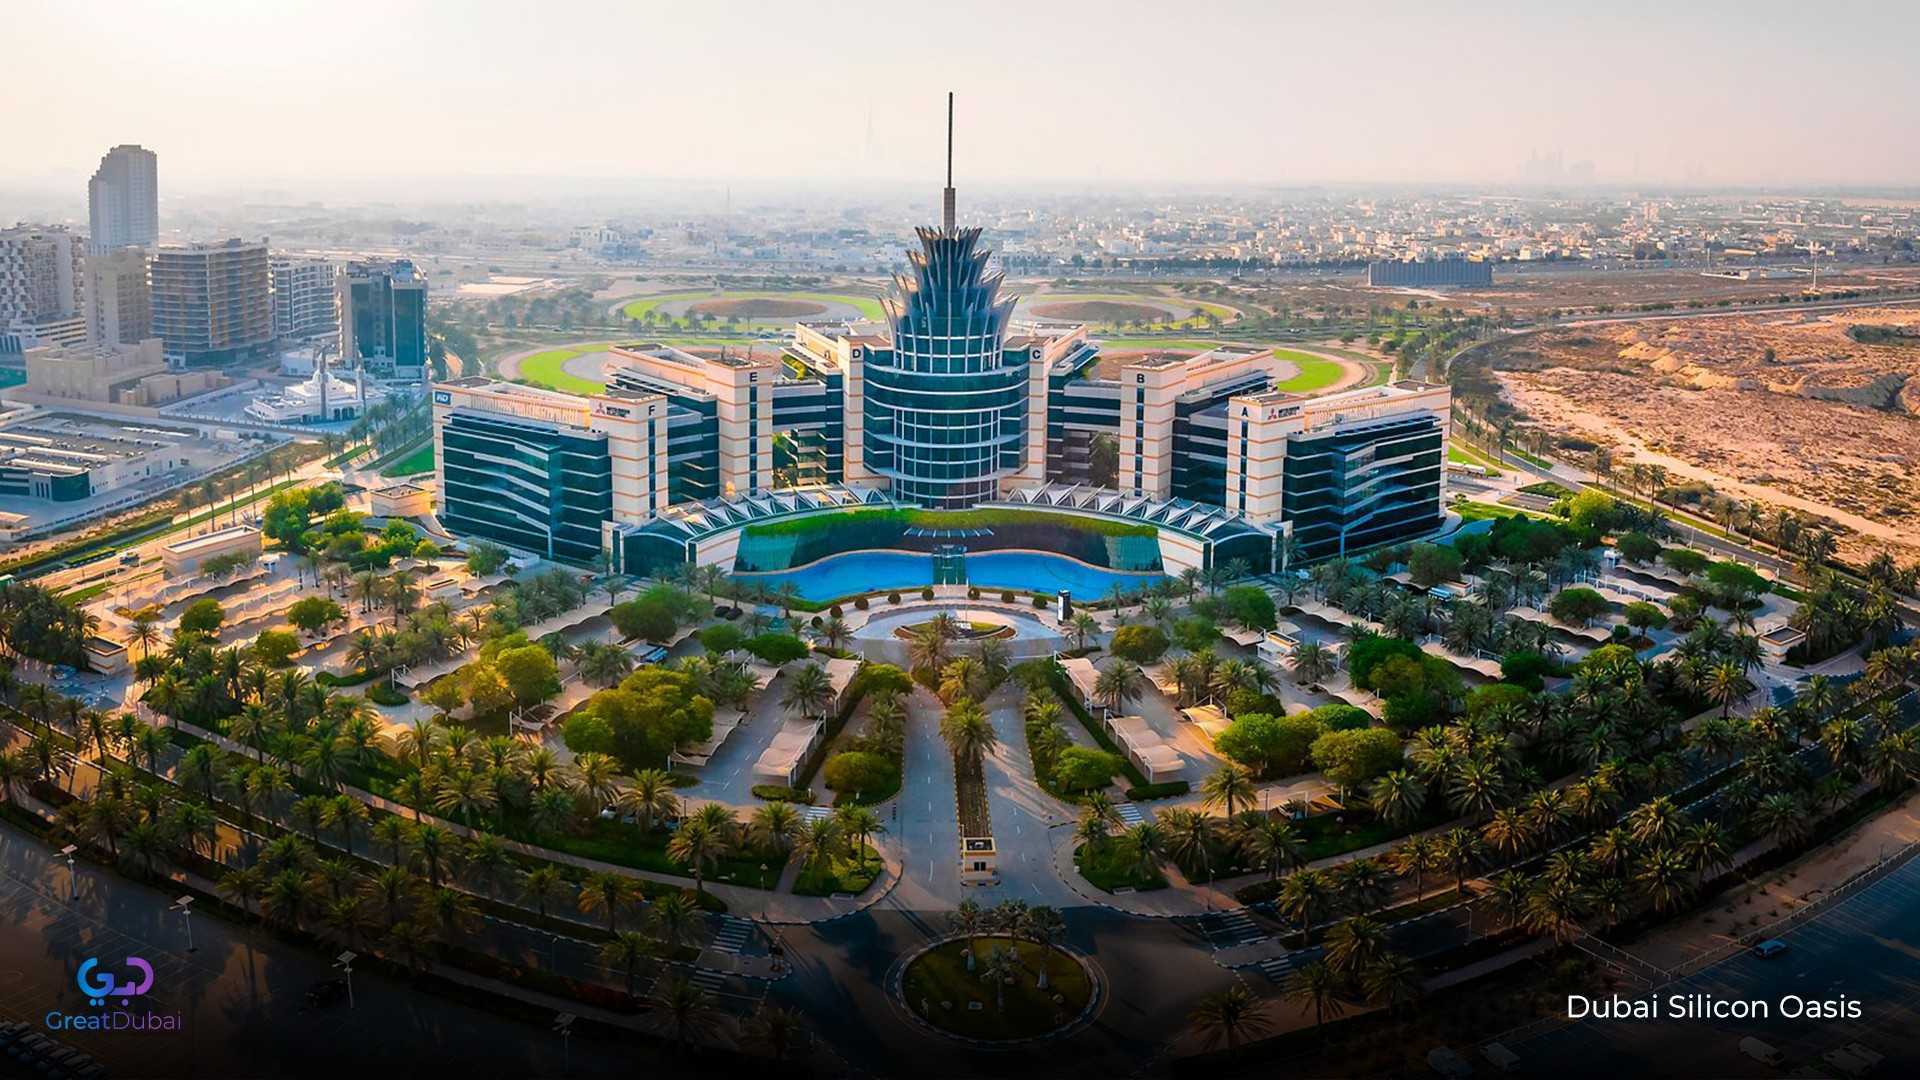 The Complete Guide to the Dubai Silicon Oasis